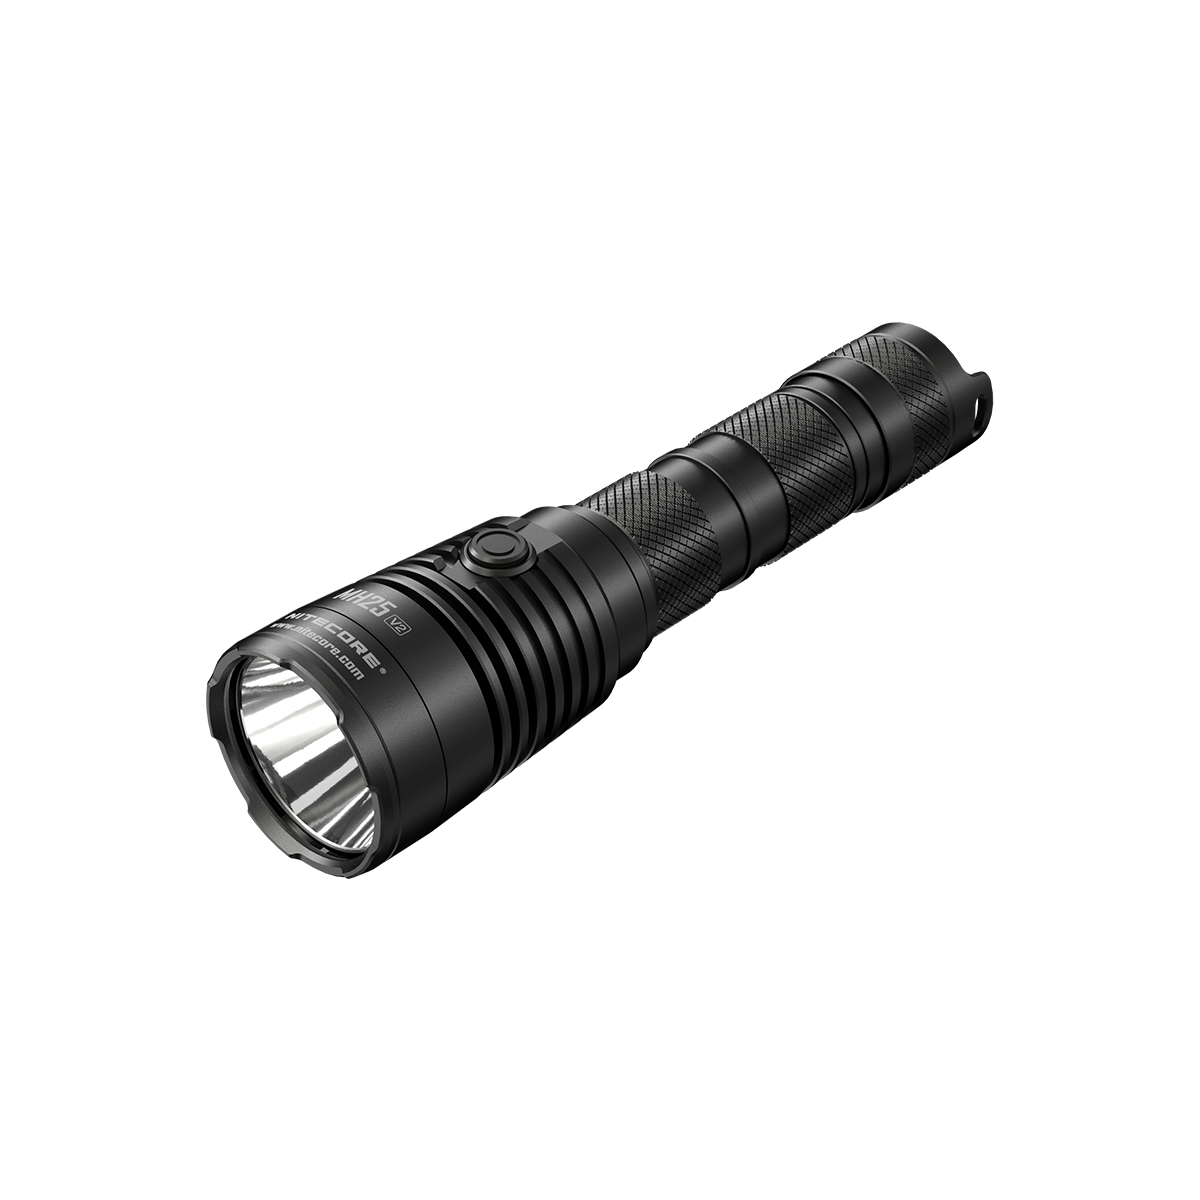 Nitecore MH25 V2 High performance LED 1300 Lumens USB-C Rechargeable Tactical flashlight